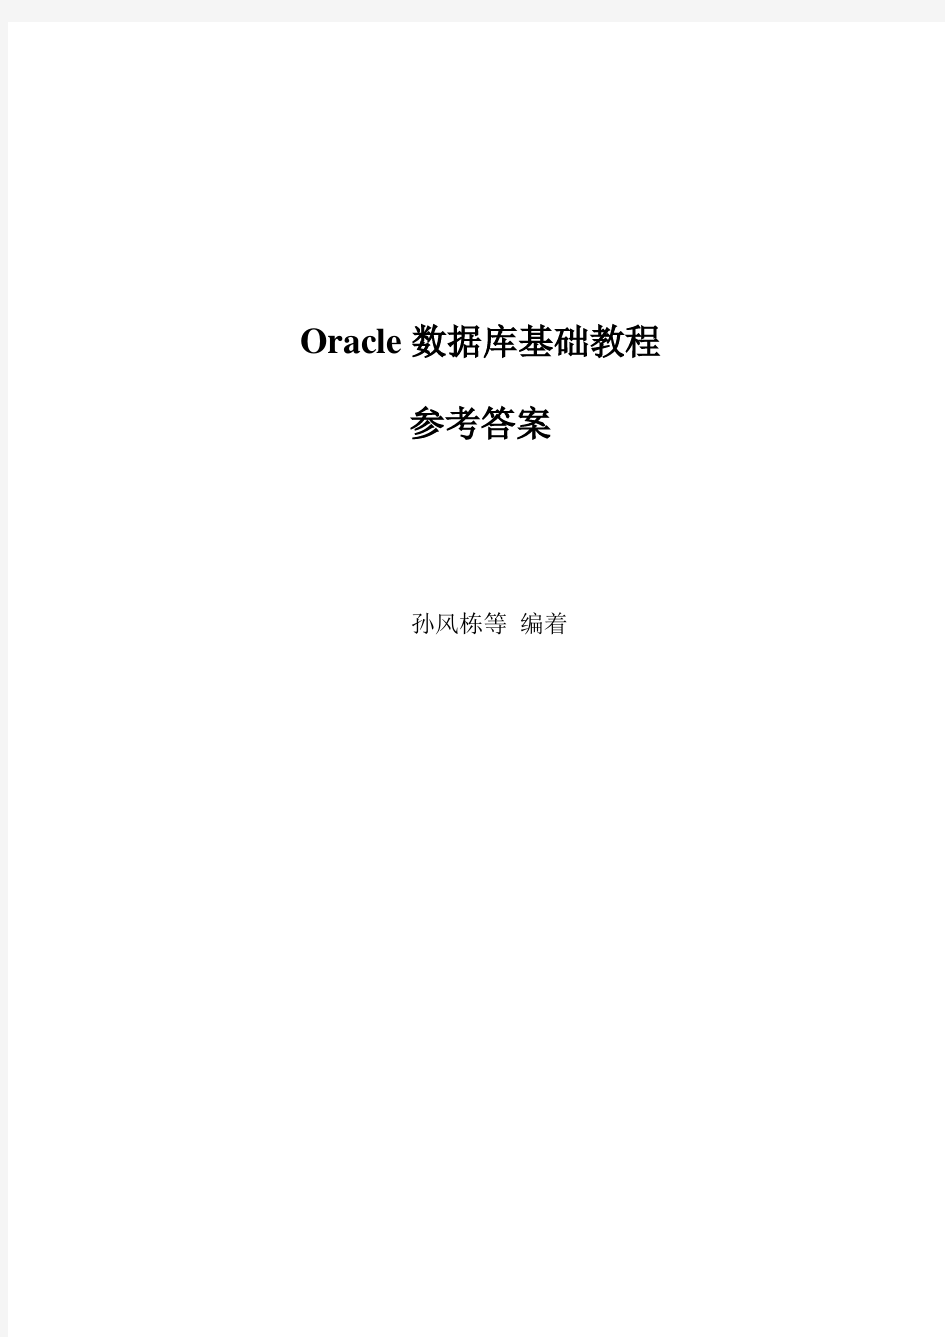 Oracle数据库基础教程孙风栋版-参考答案